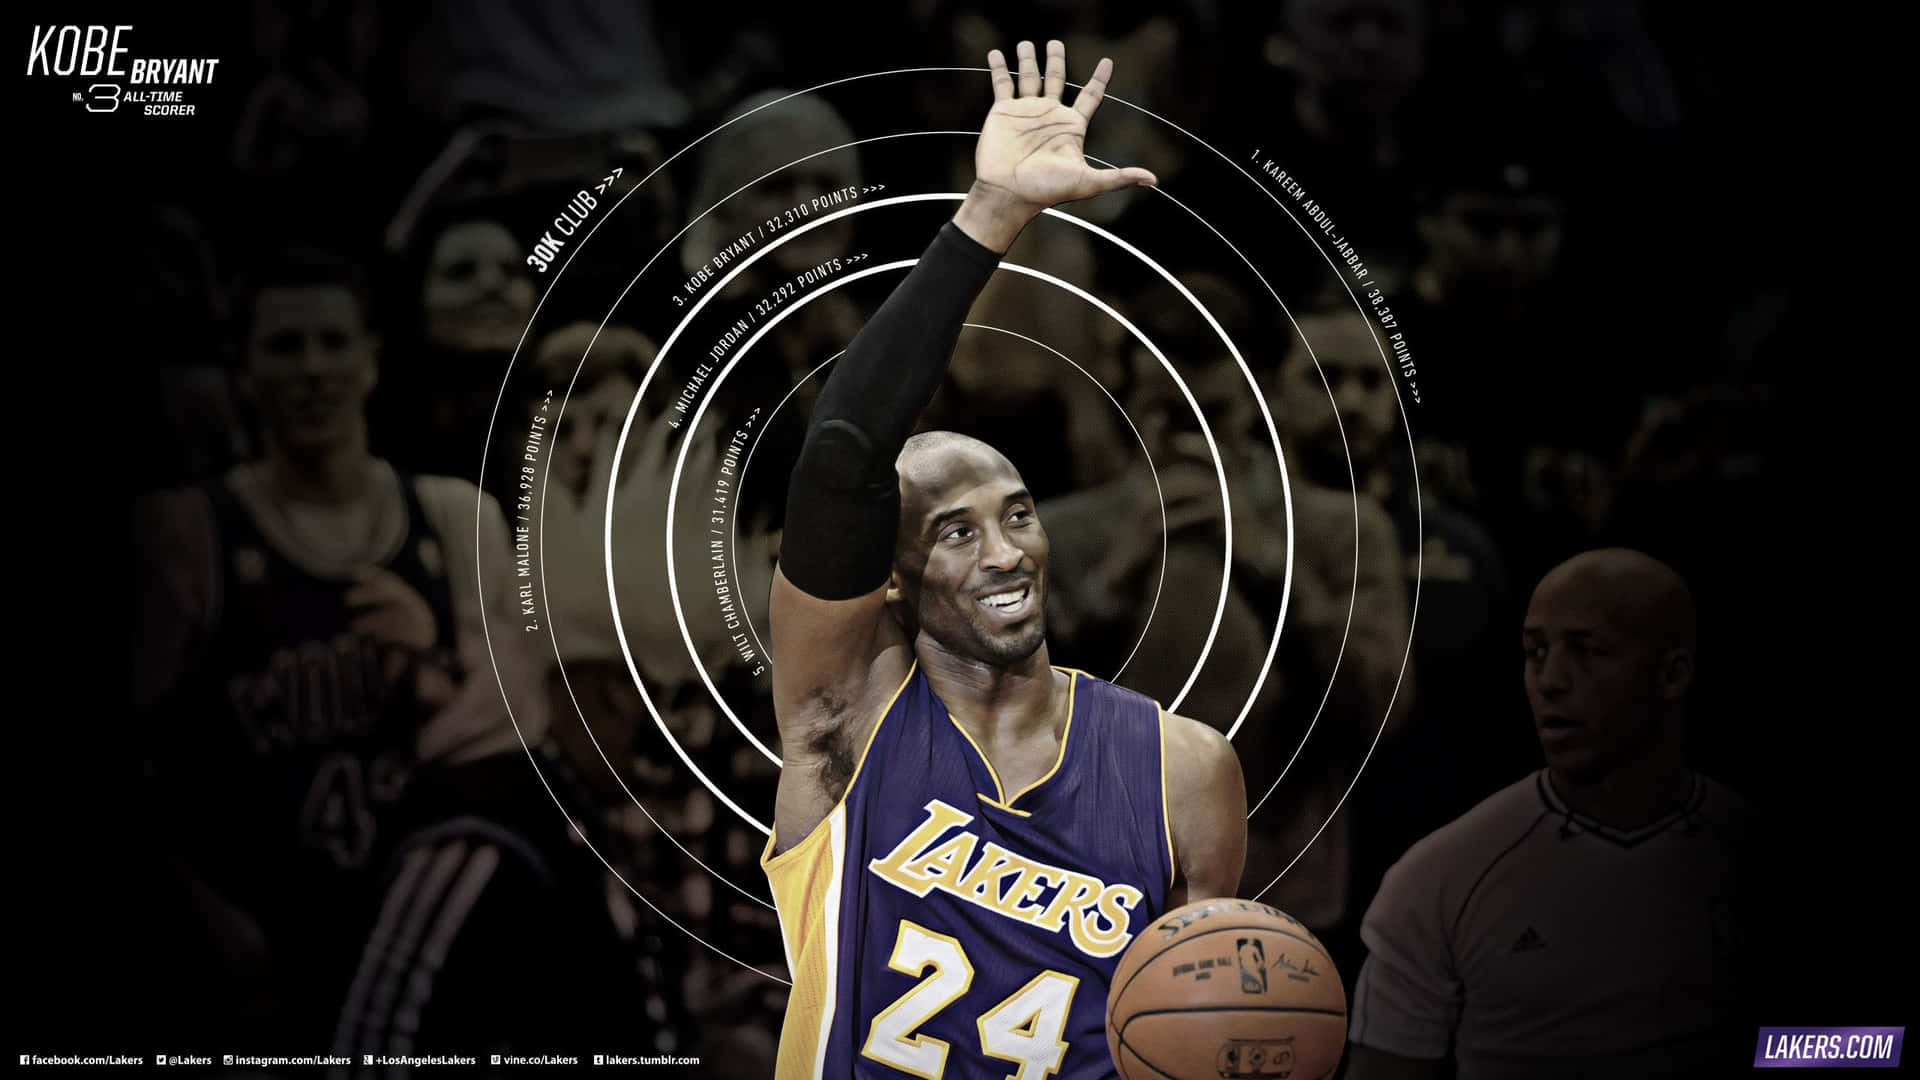 Kobe Bryant's Star Will Forever Shine Bright